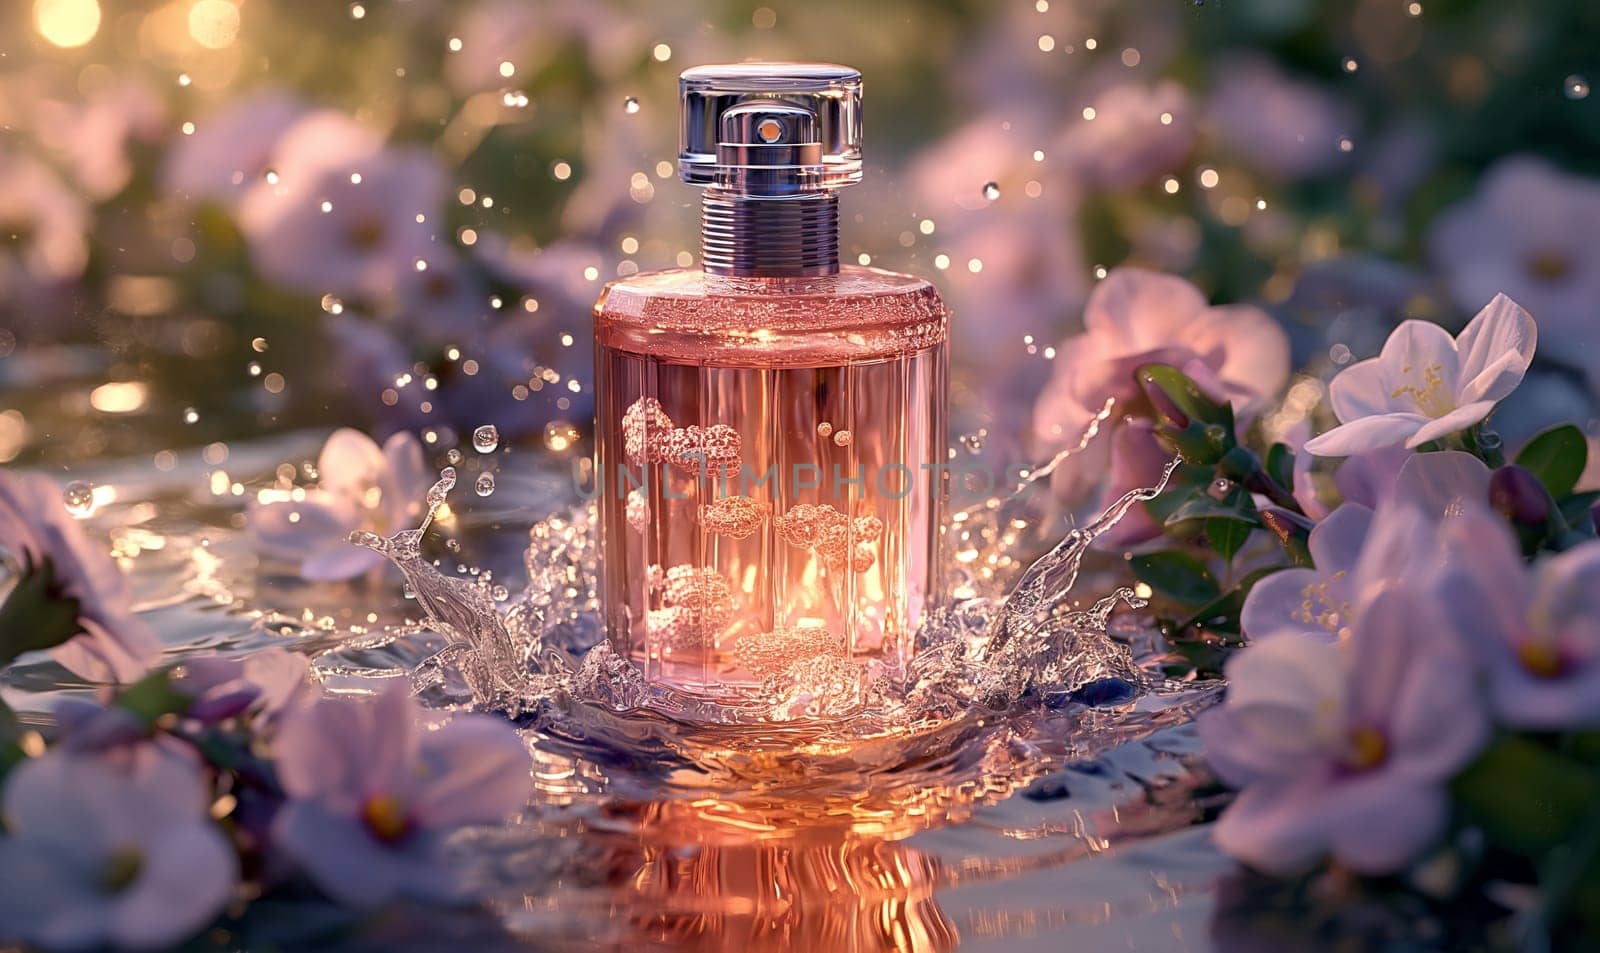 Elegant Perfume Bottle Amidst Lilac Flowers. Selective focus